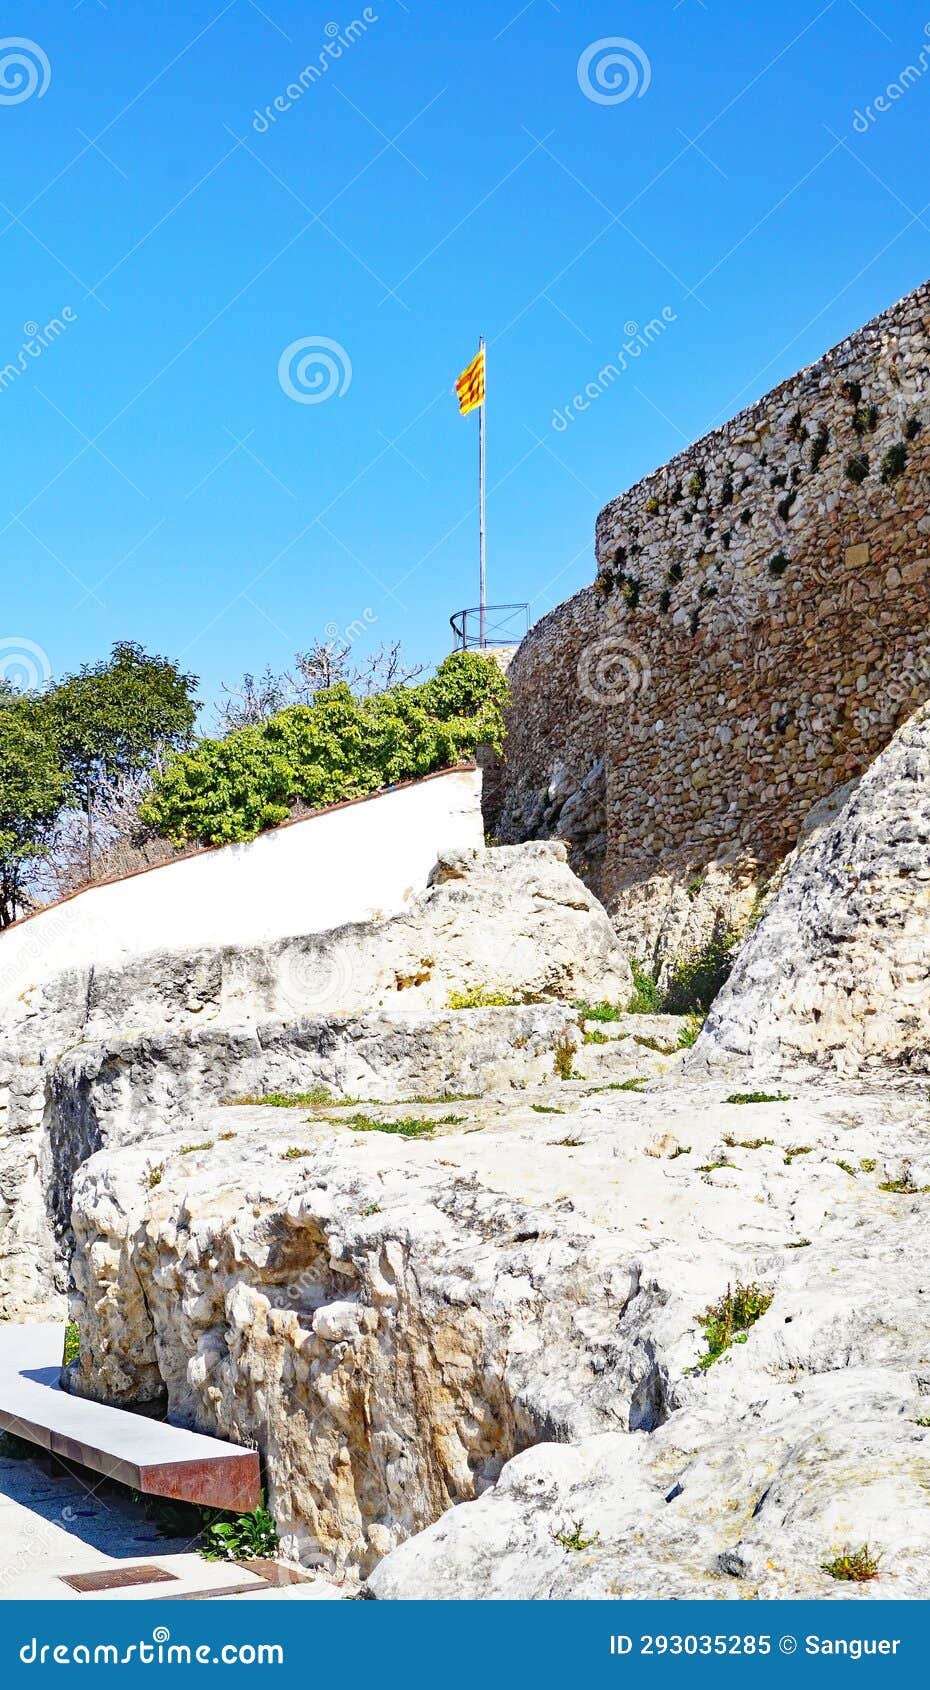 the santa creu castle in calafell, costa dorada, tarragona